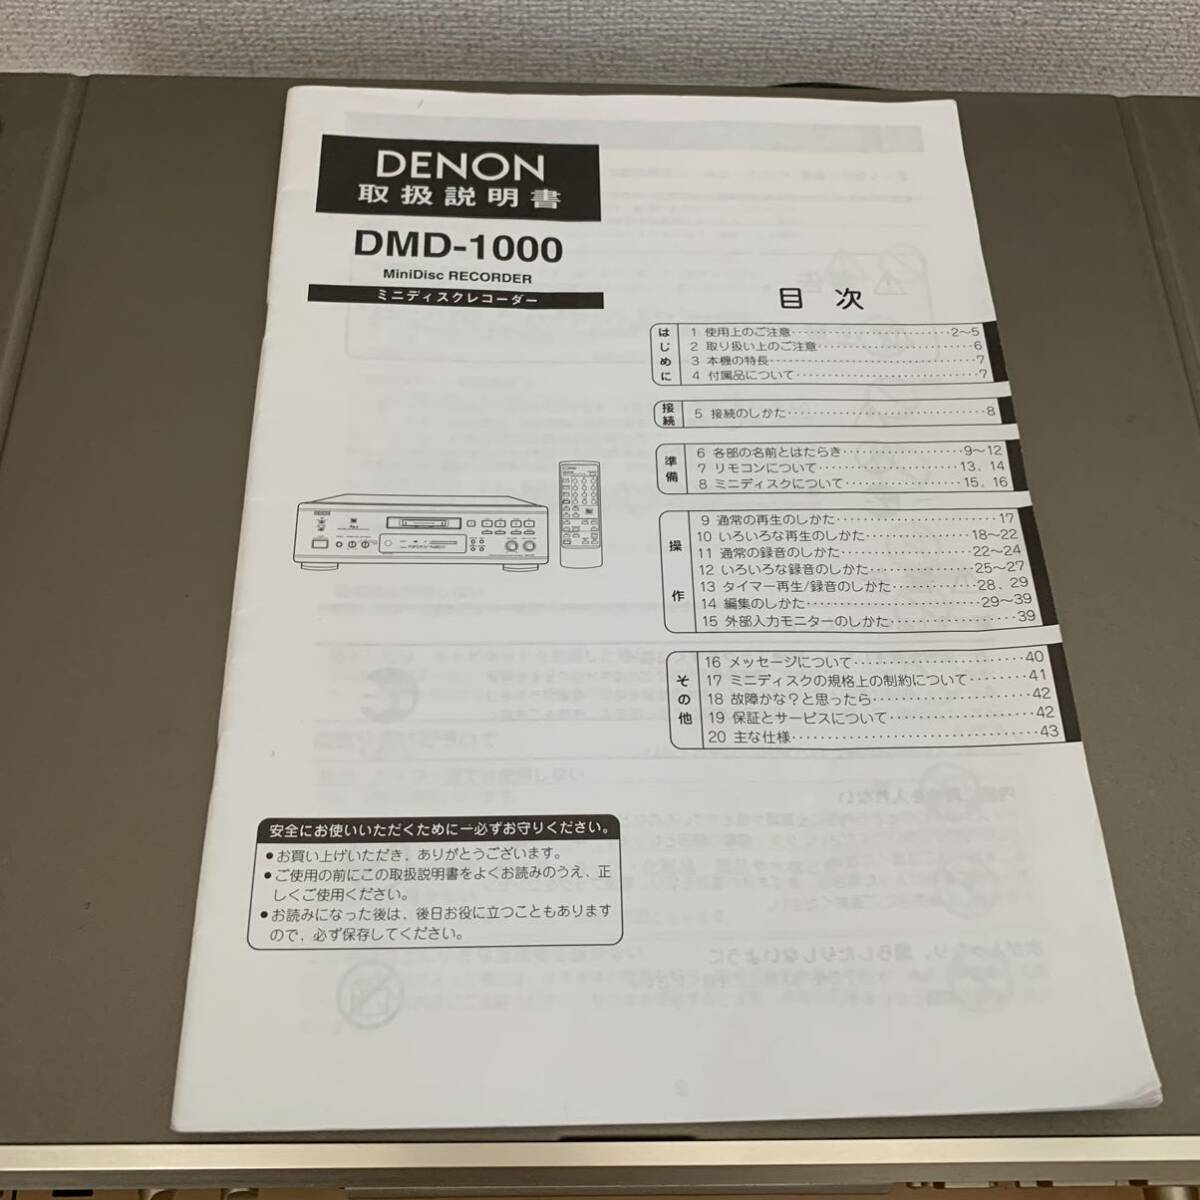 101)DENON Denon DMD-1000 MD плеер MD панель с руководством пользователя 